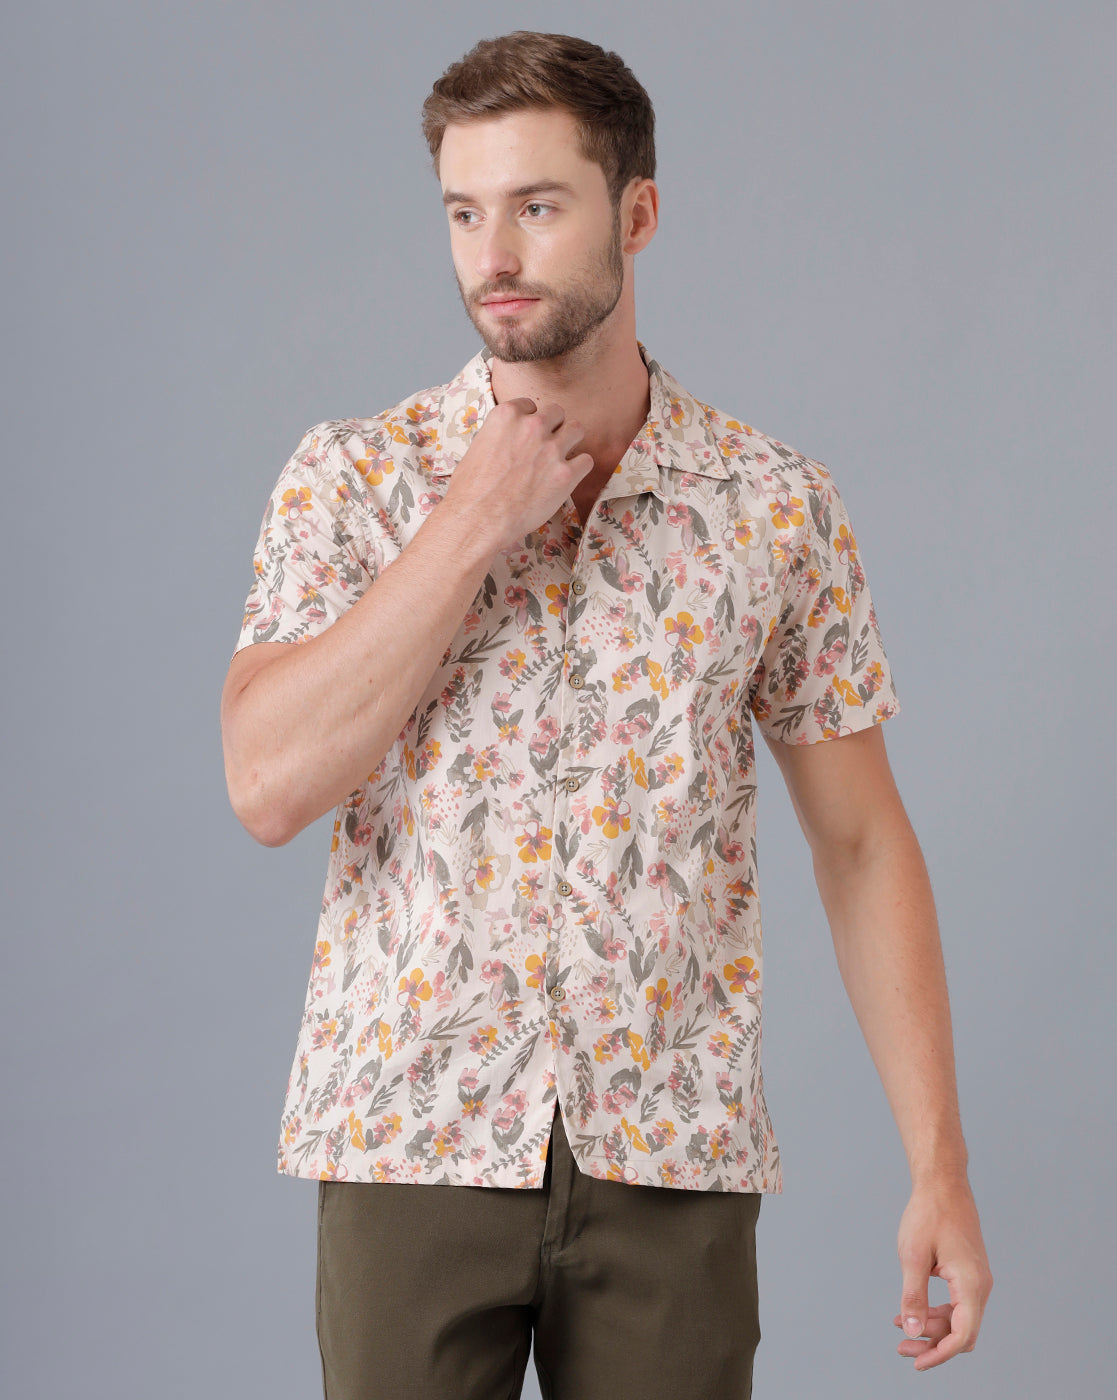 Flower print shirt mens